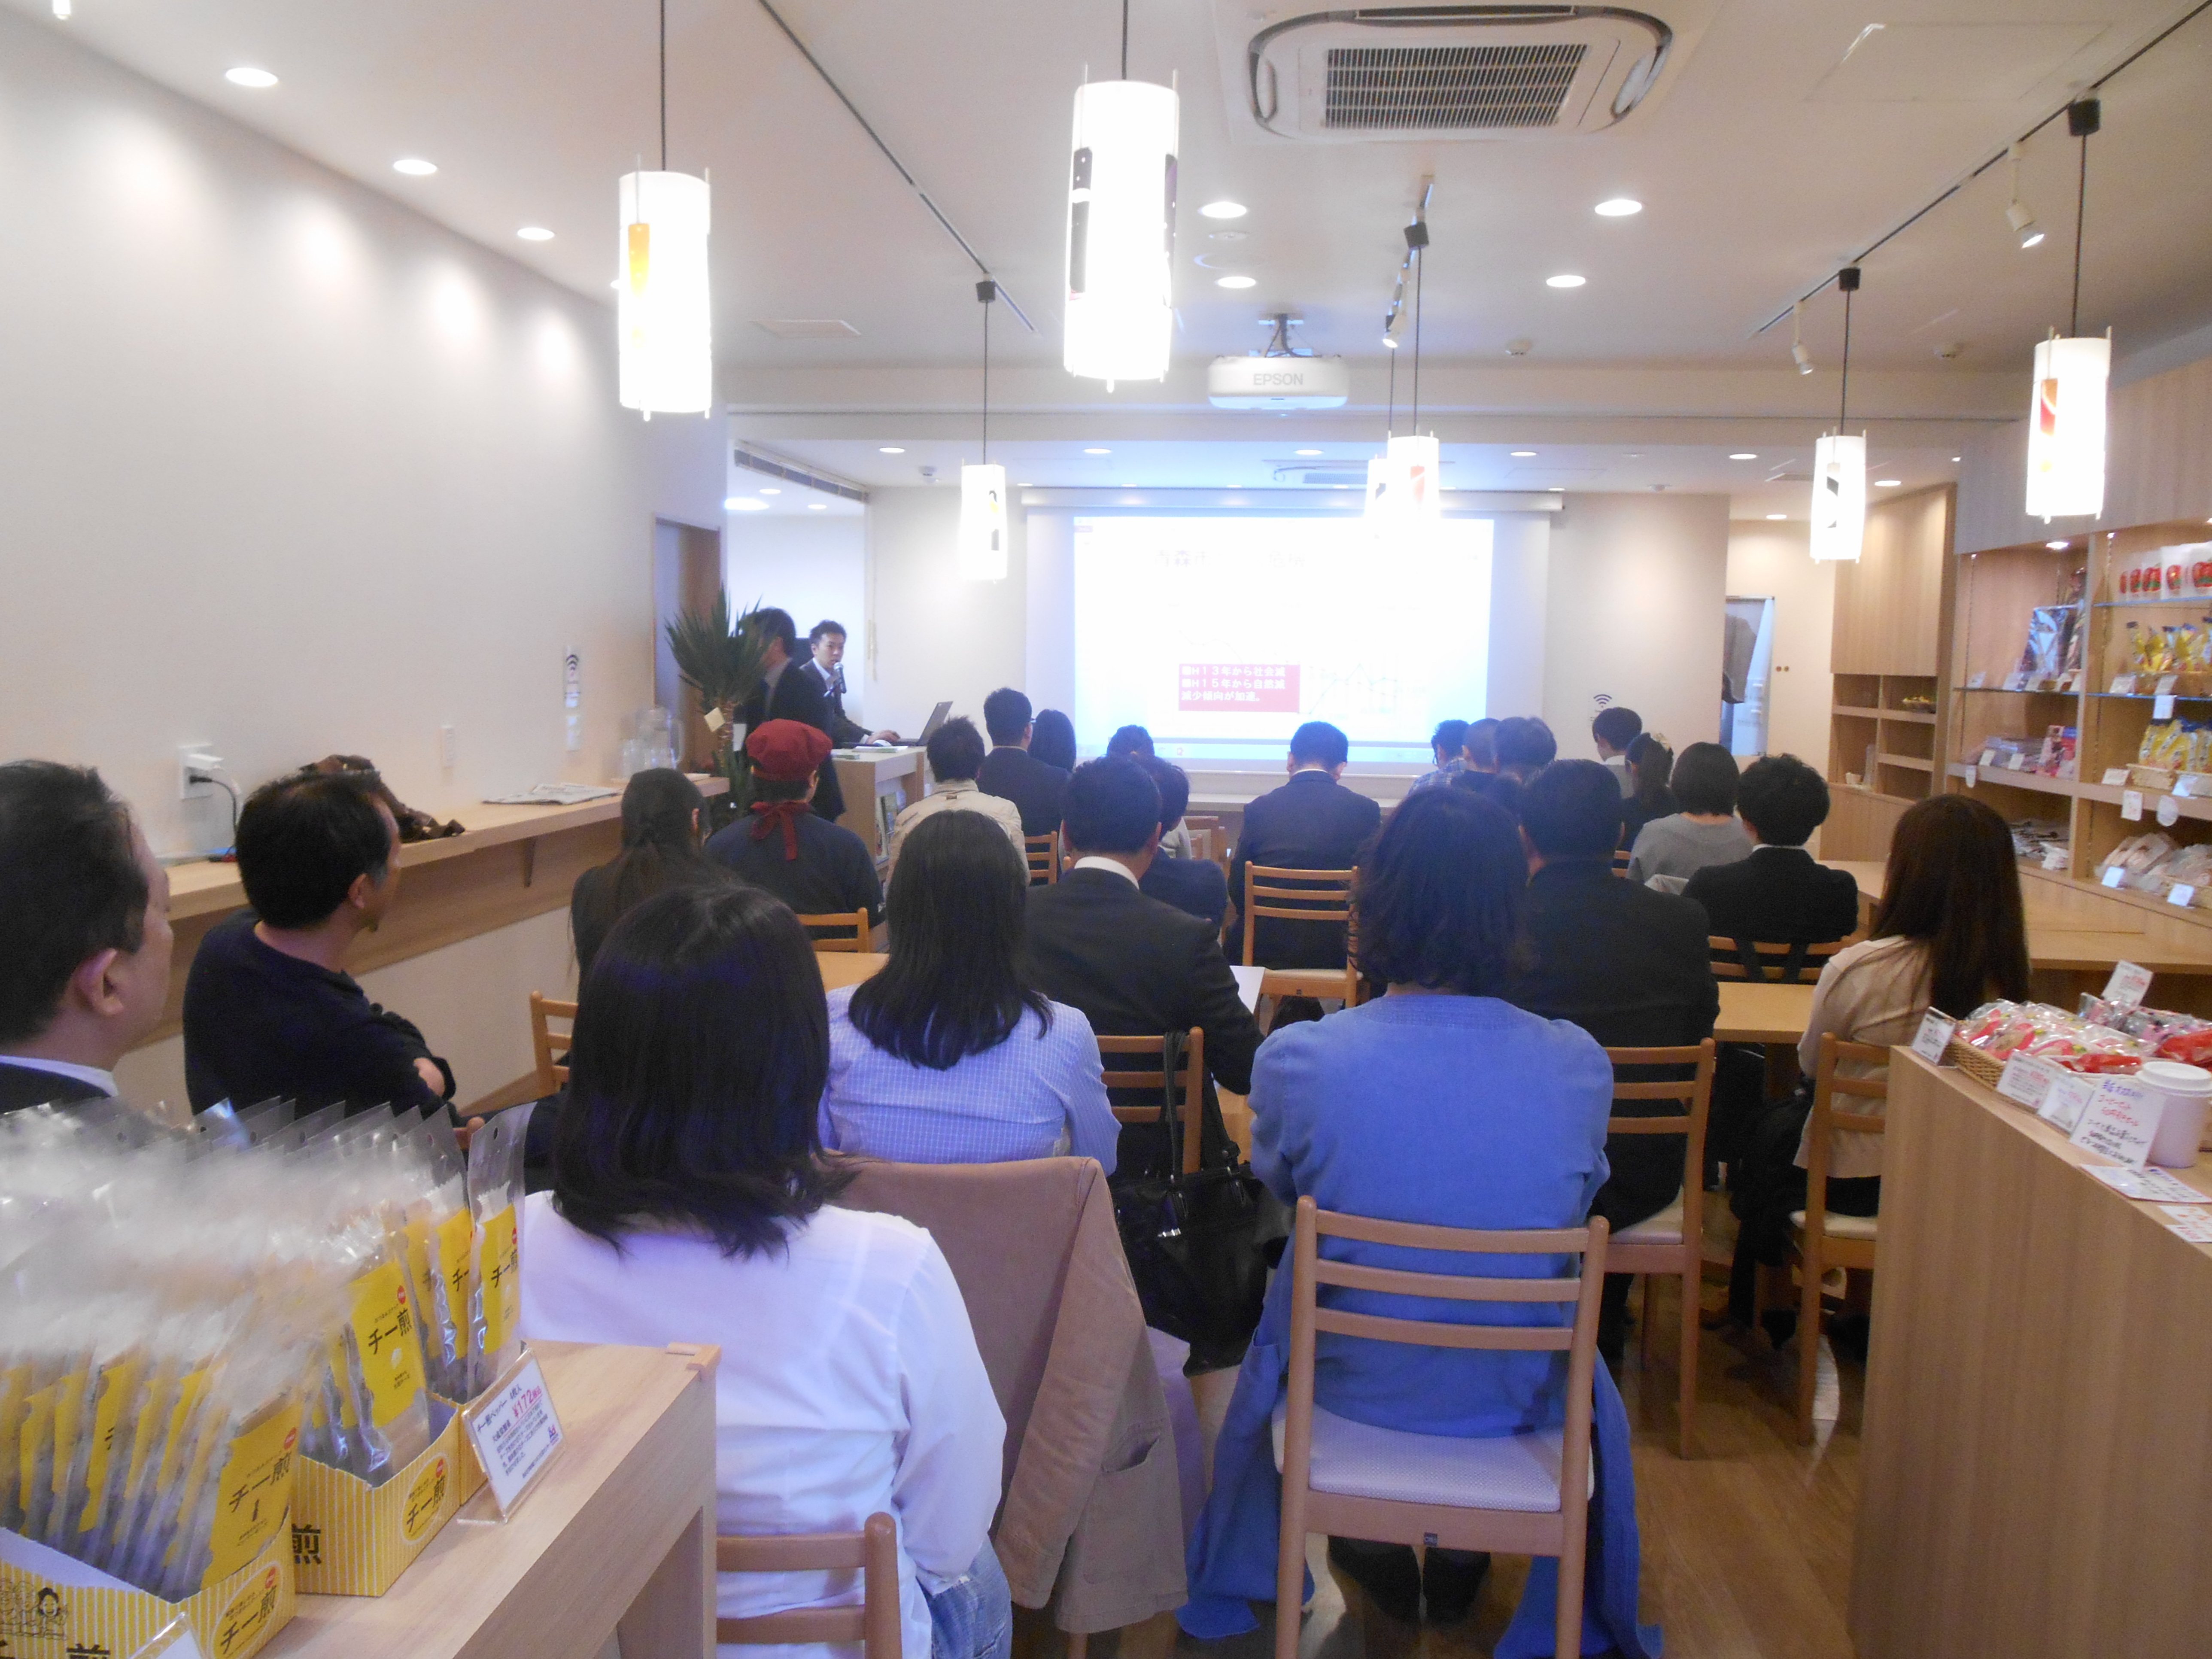 DSCN1563 1 - AoMoLink〜赤坂〜の第2回勉強会&交流会開催します。